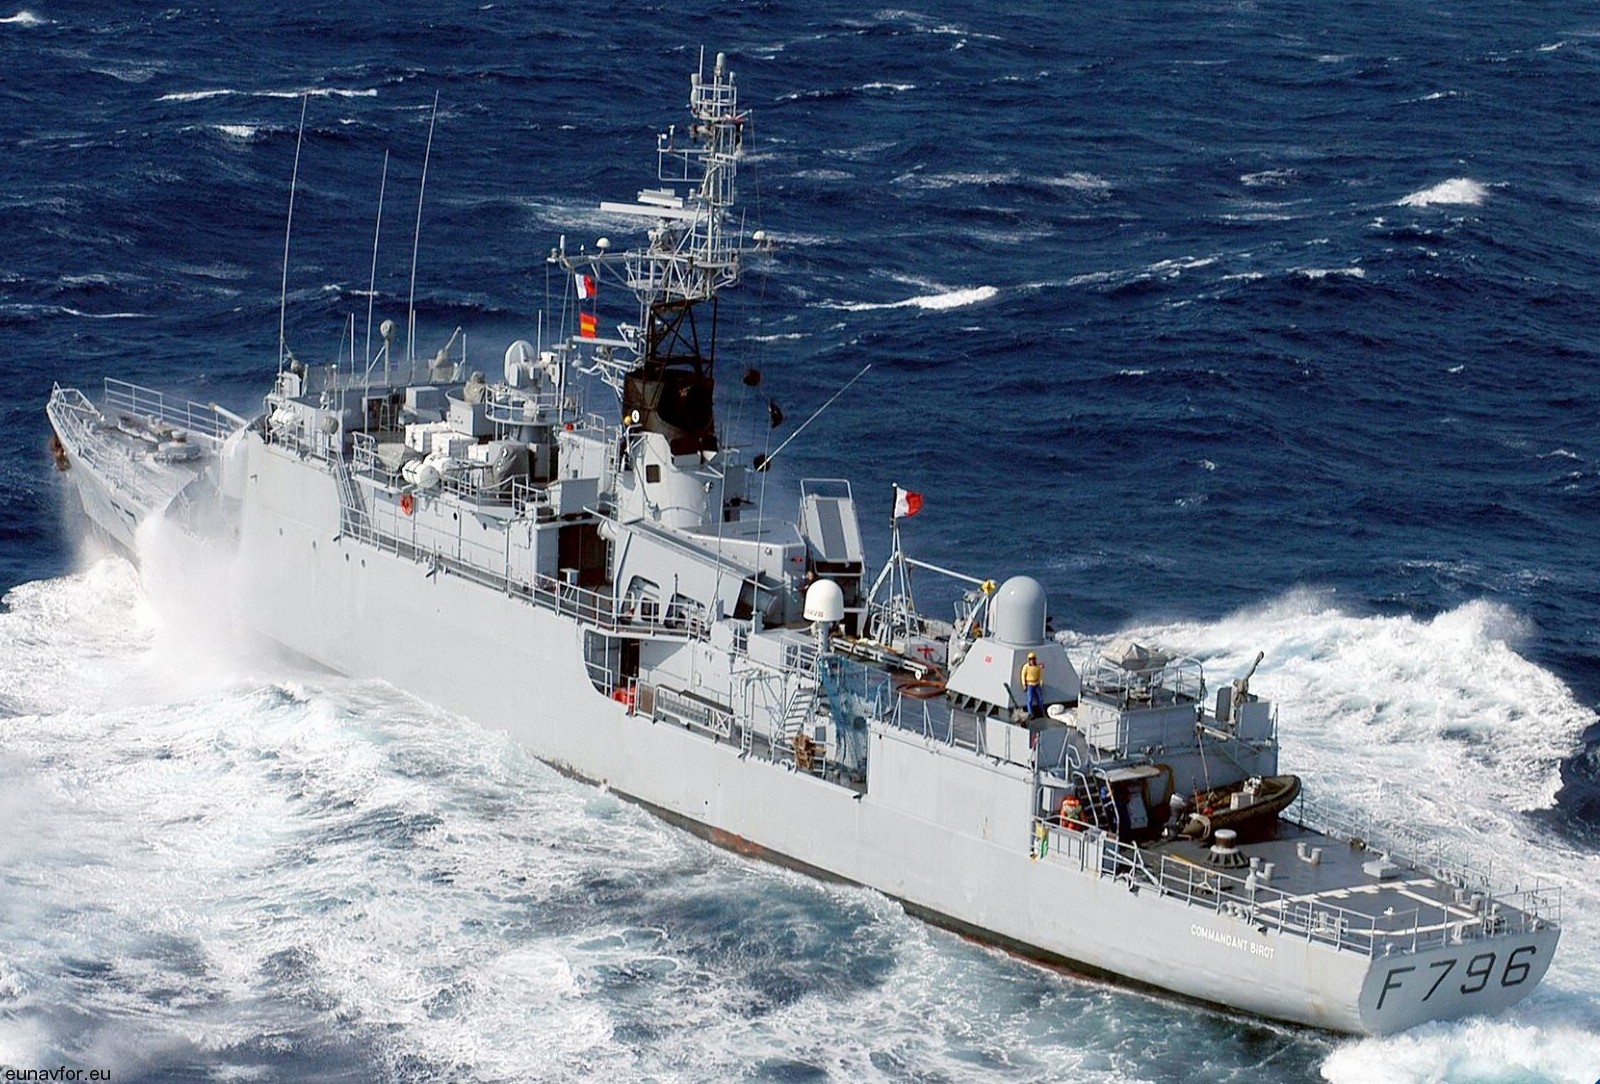 f-796 fs commandant birot d'estienne d'orves class corvette type a69 aviso french navy marine nationale 03